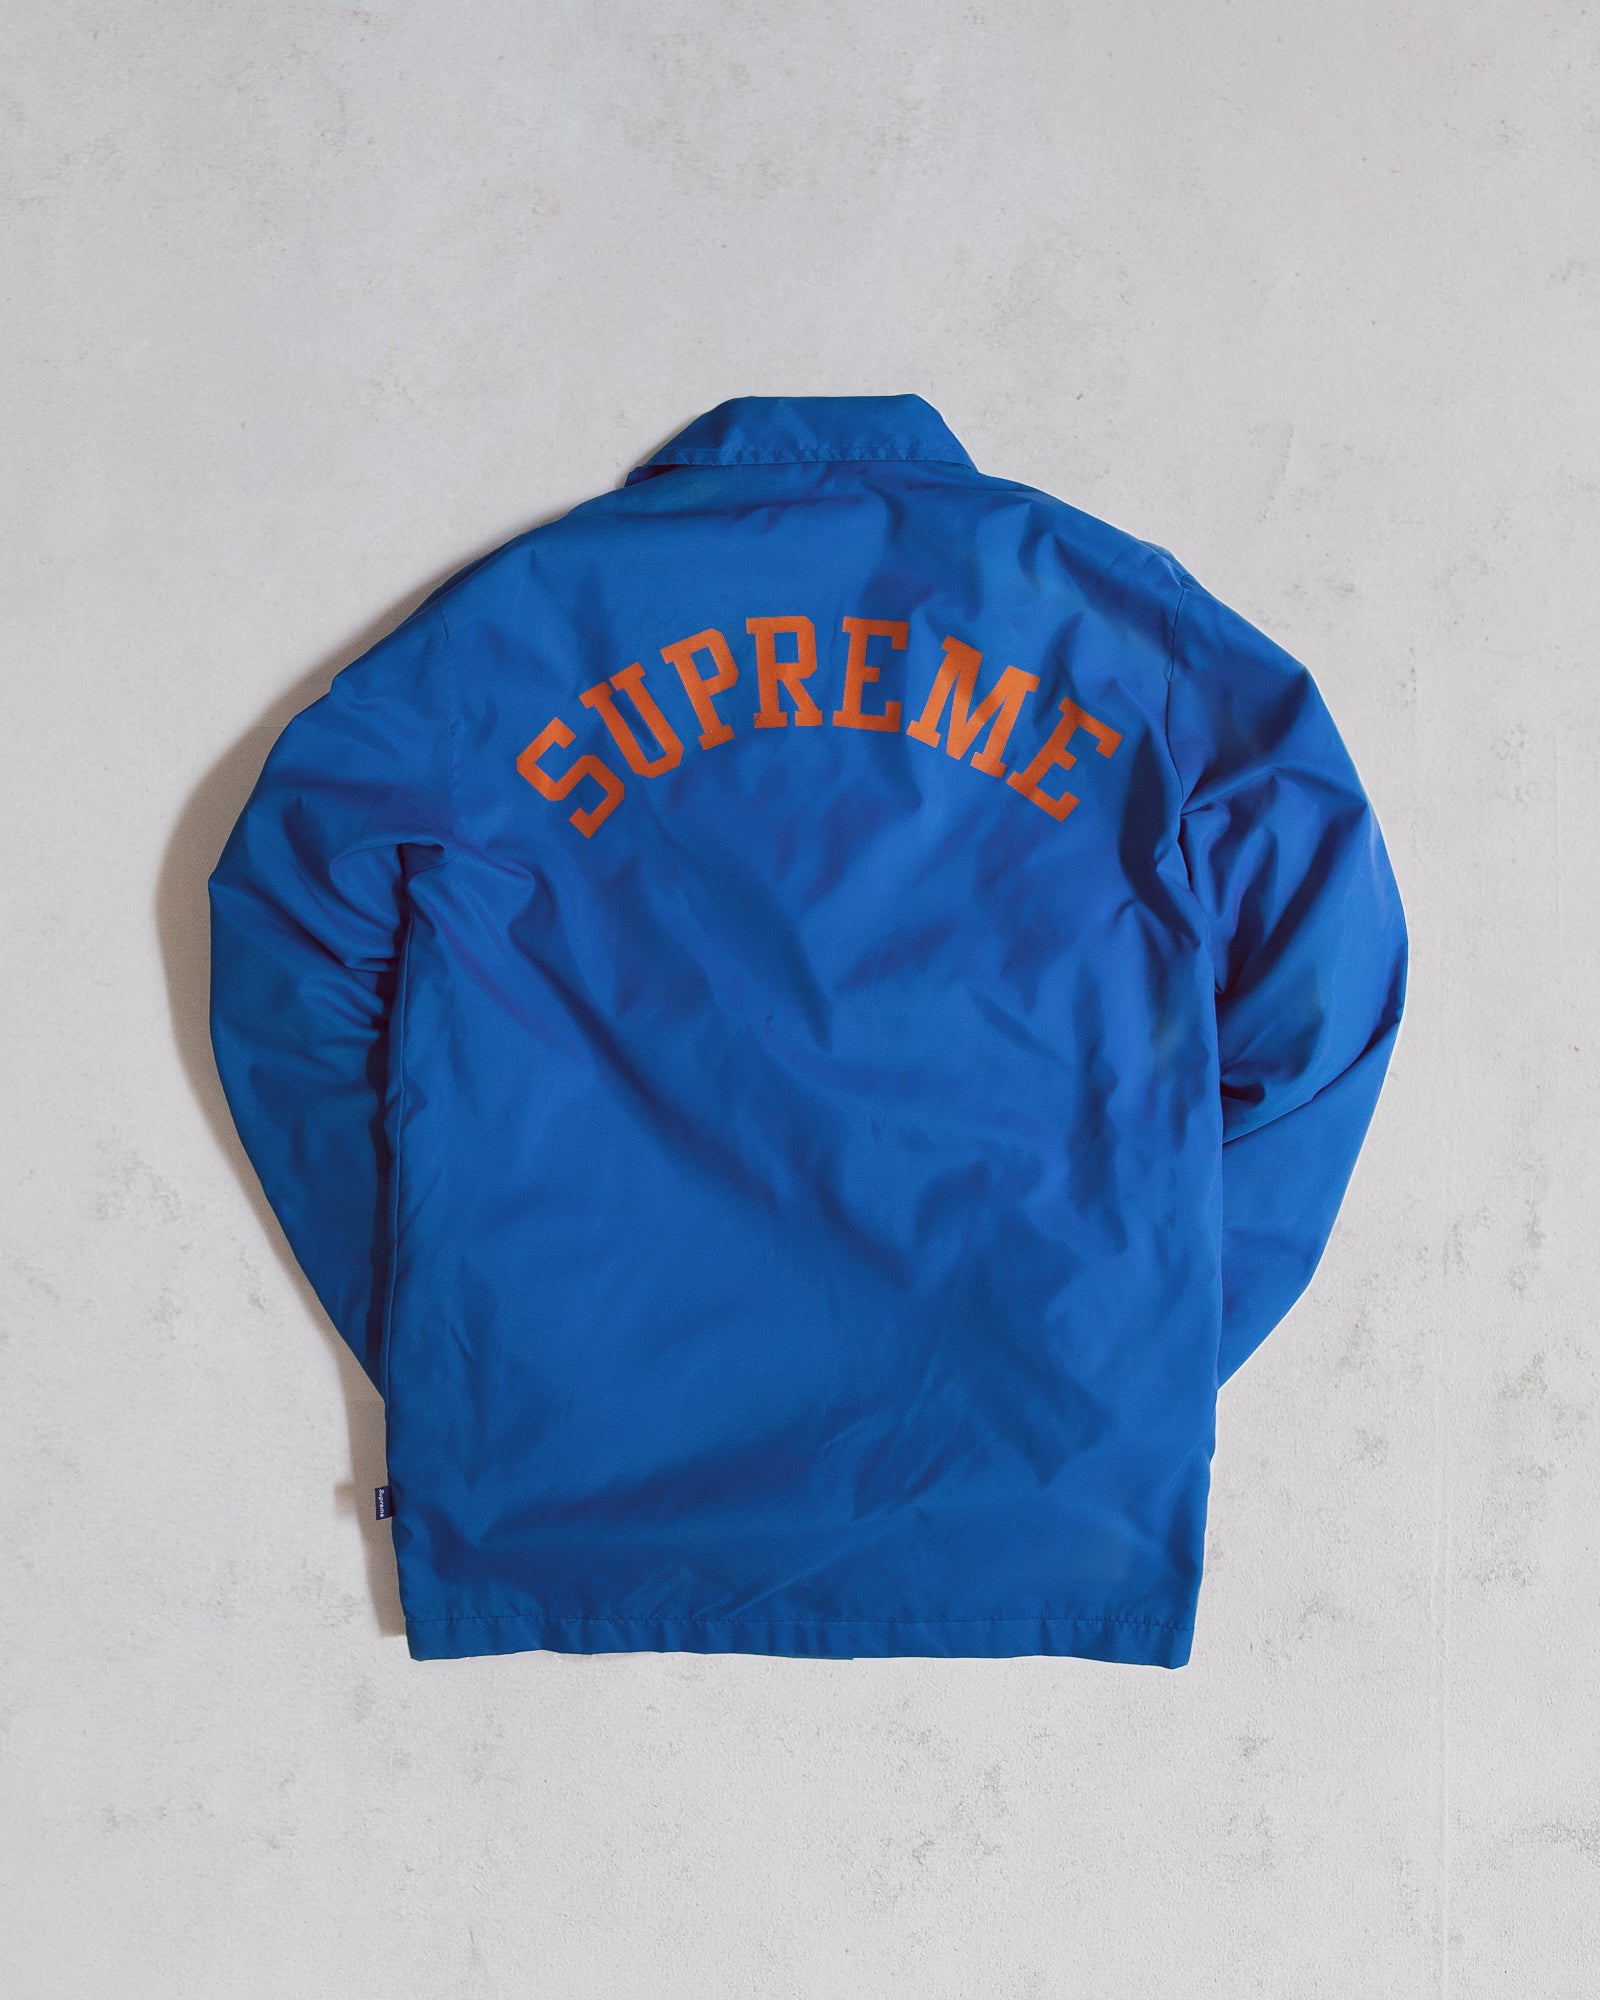 Vintage Supreme Coach Jacket (Medium)